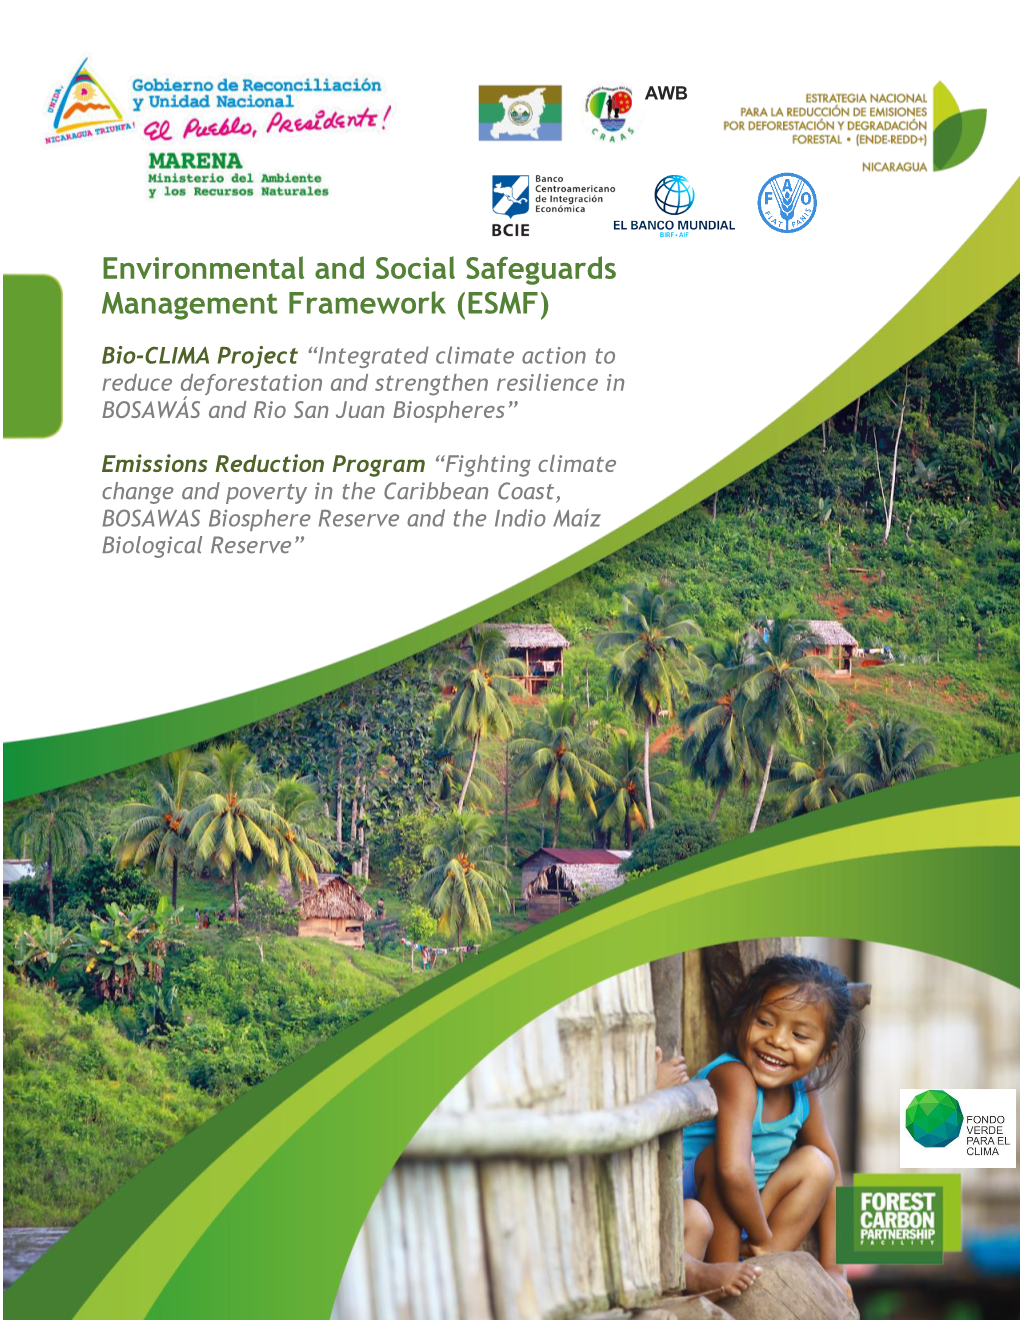 Environmental and Social Safeguards Management Framework (ESMF)